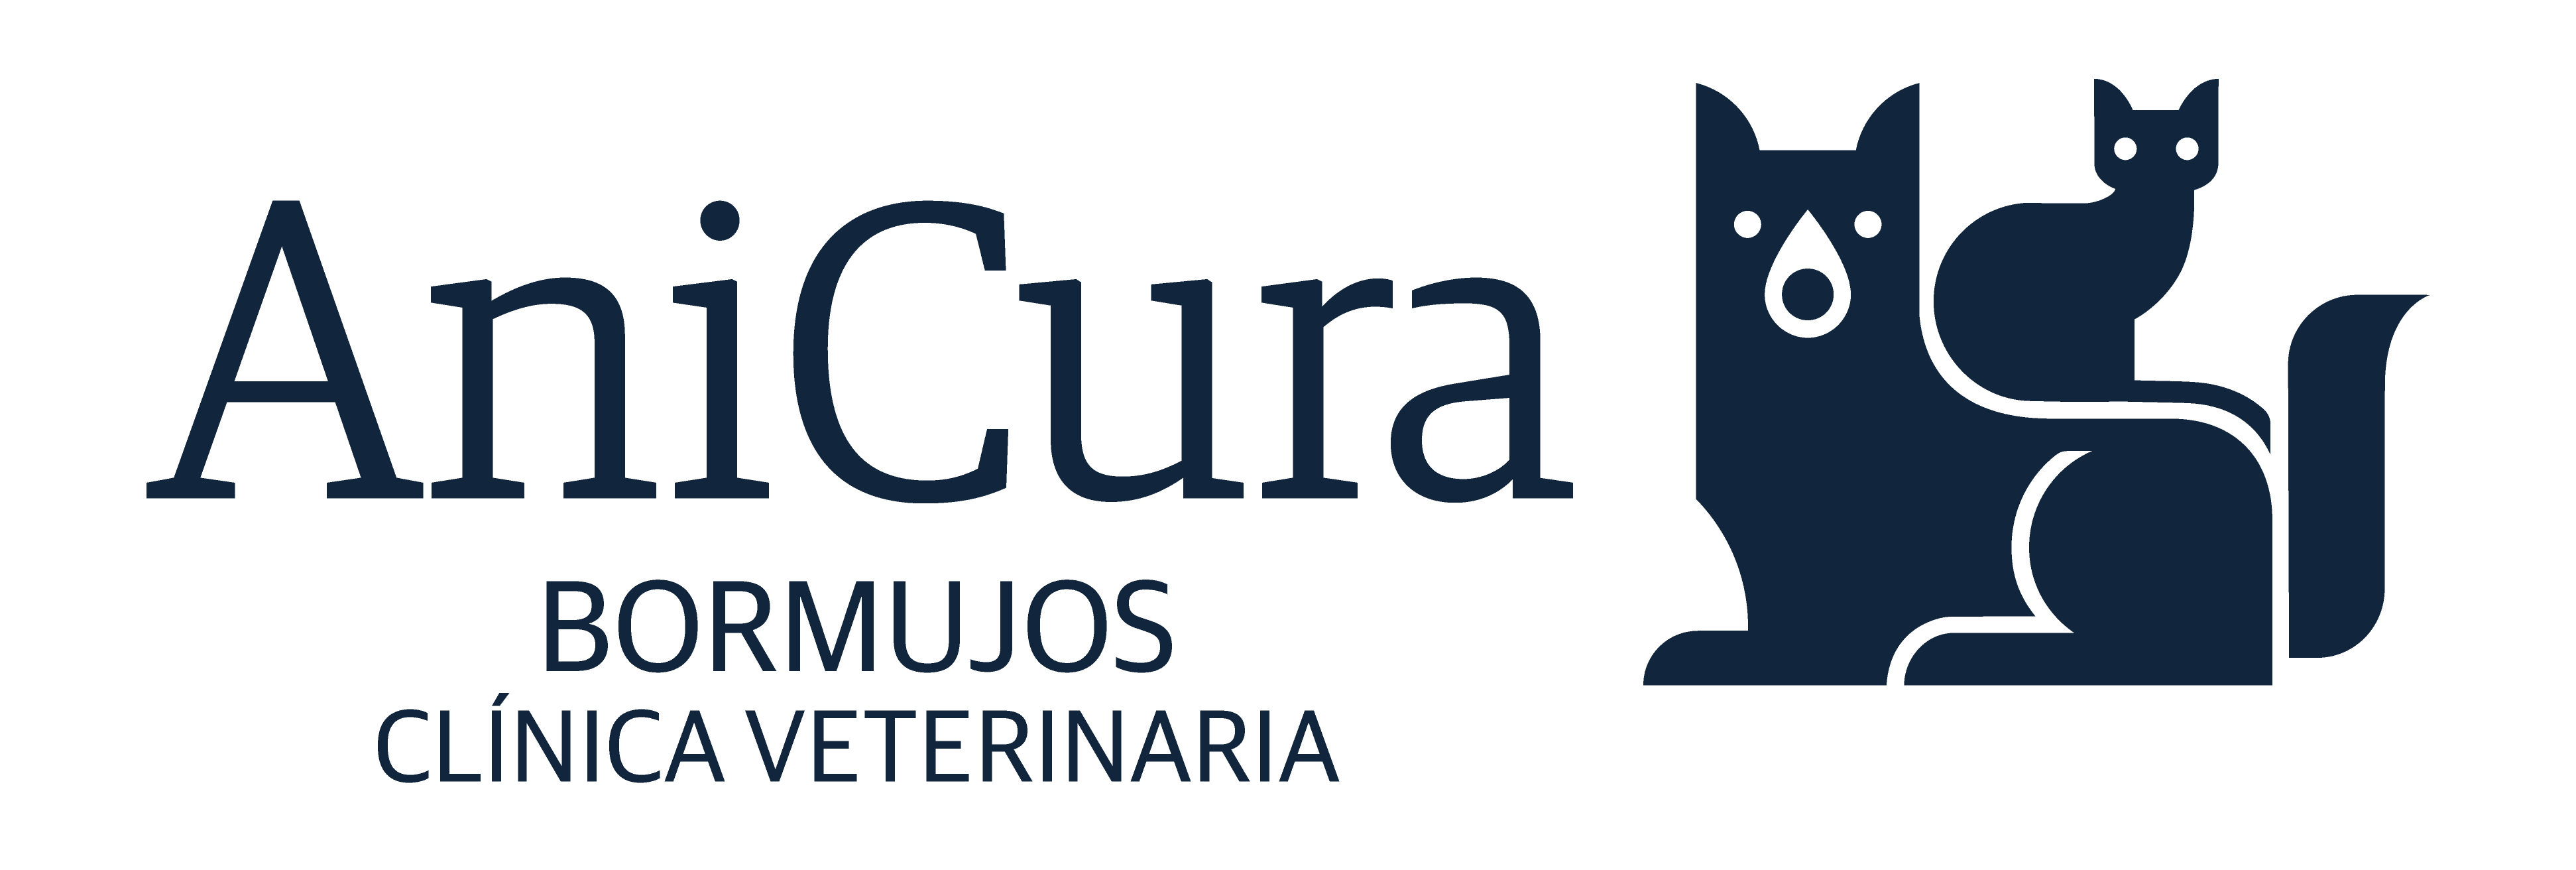 AniCura Bormujos Clínica Veterinaria logo